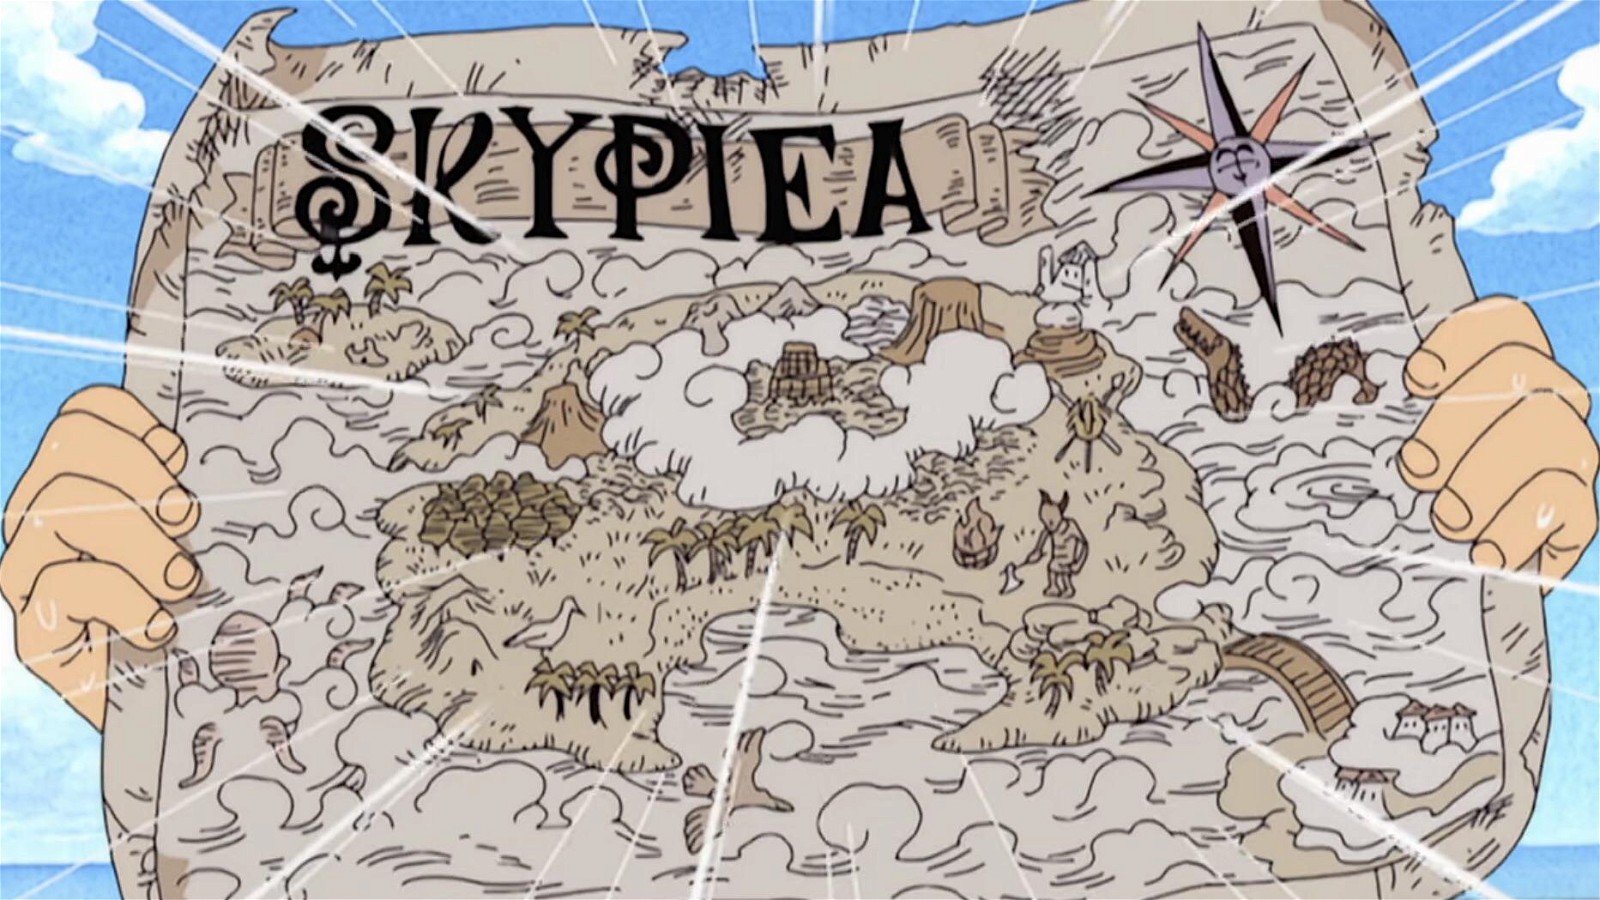 Skypiea Arc - One Piece